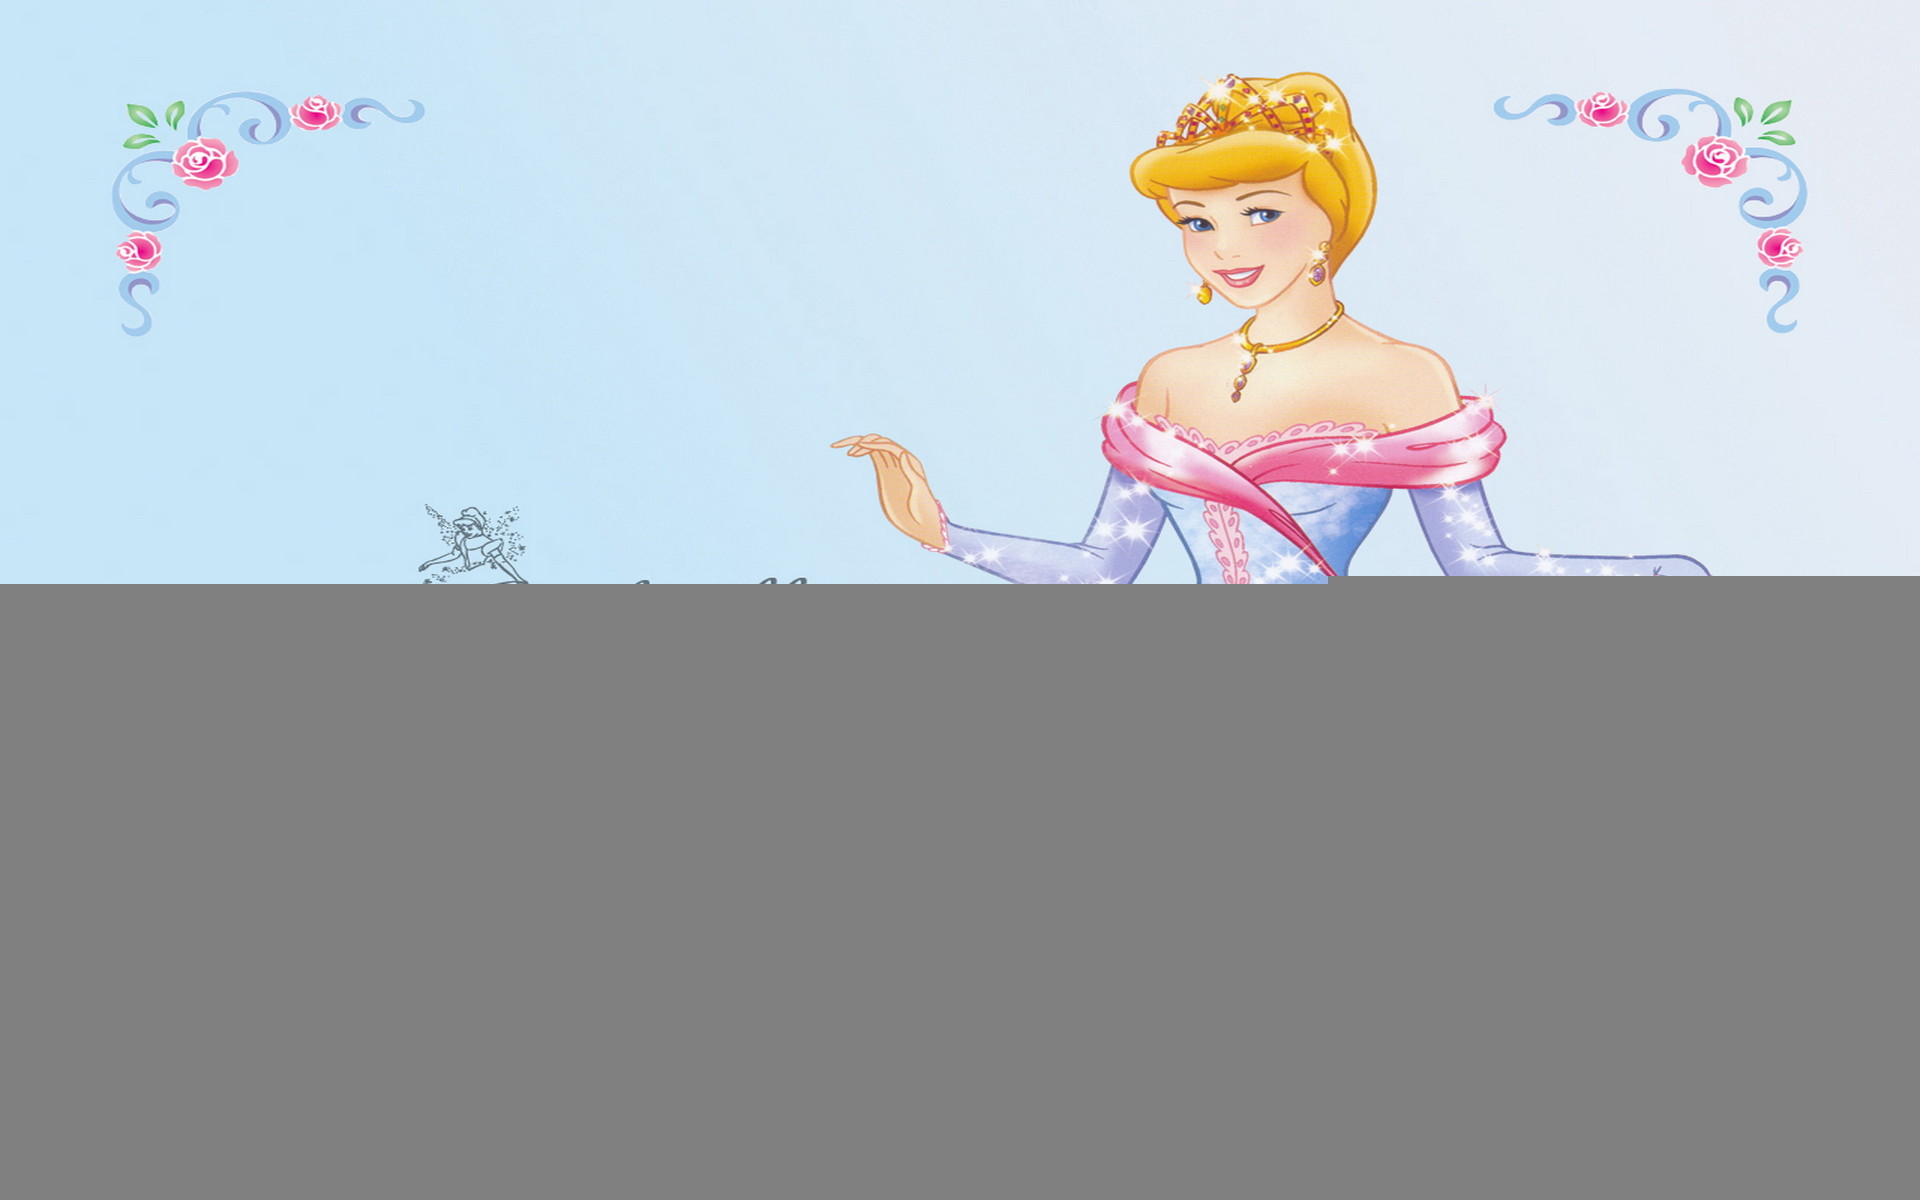 1920x1200 Latest Cinderella Wallpaper